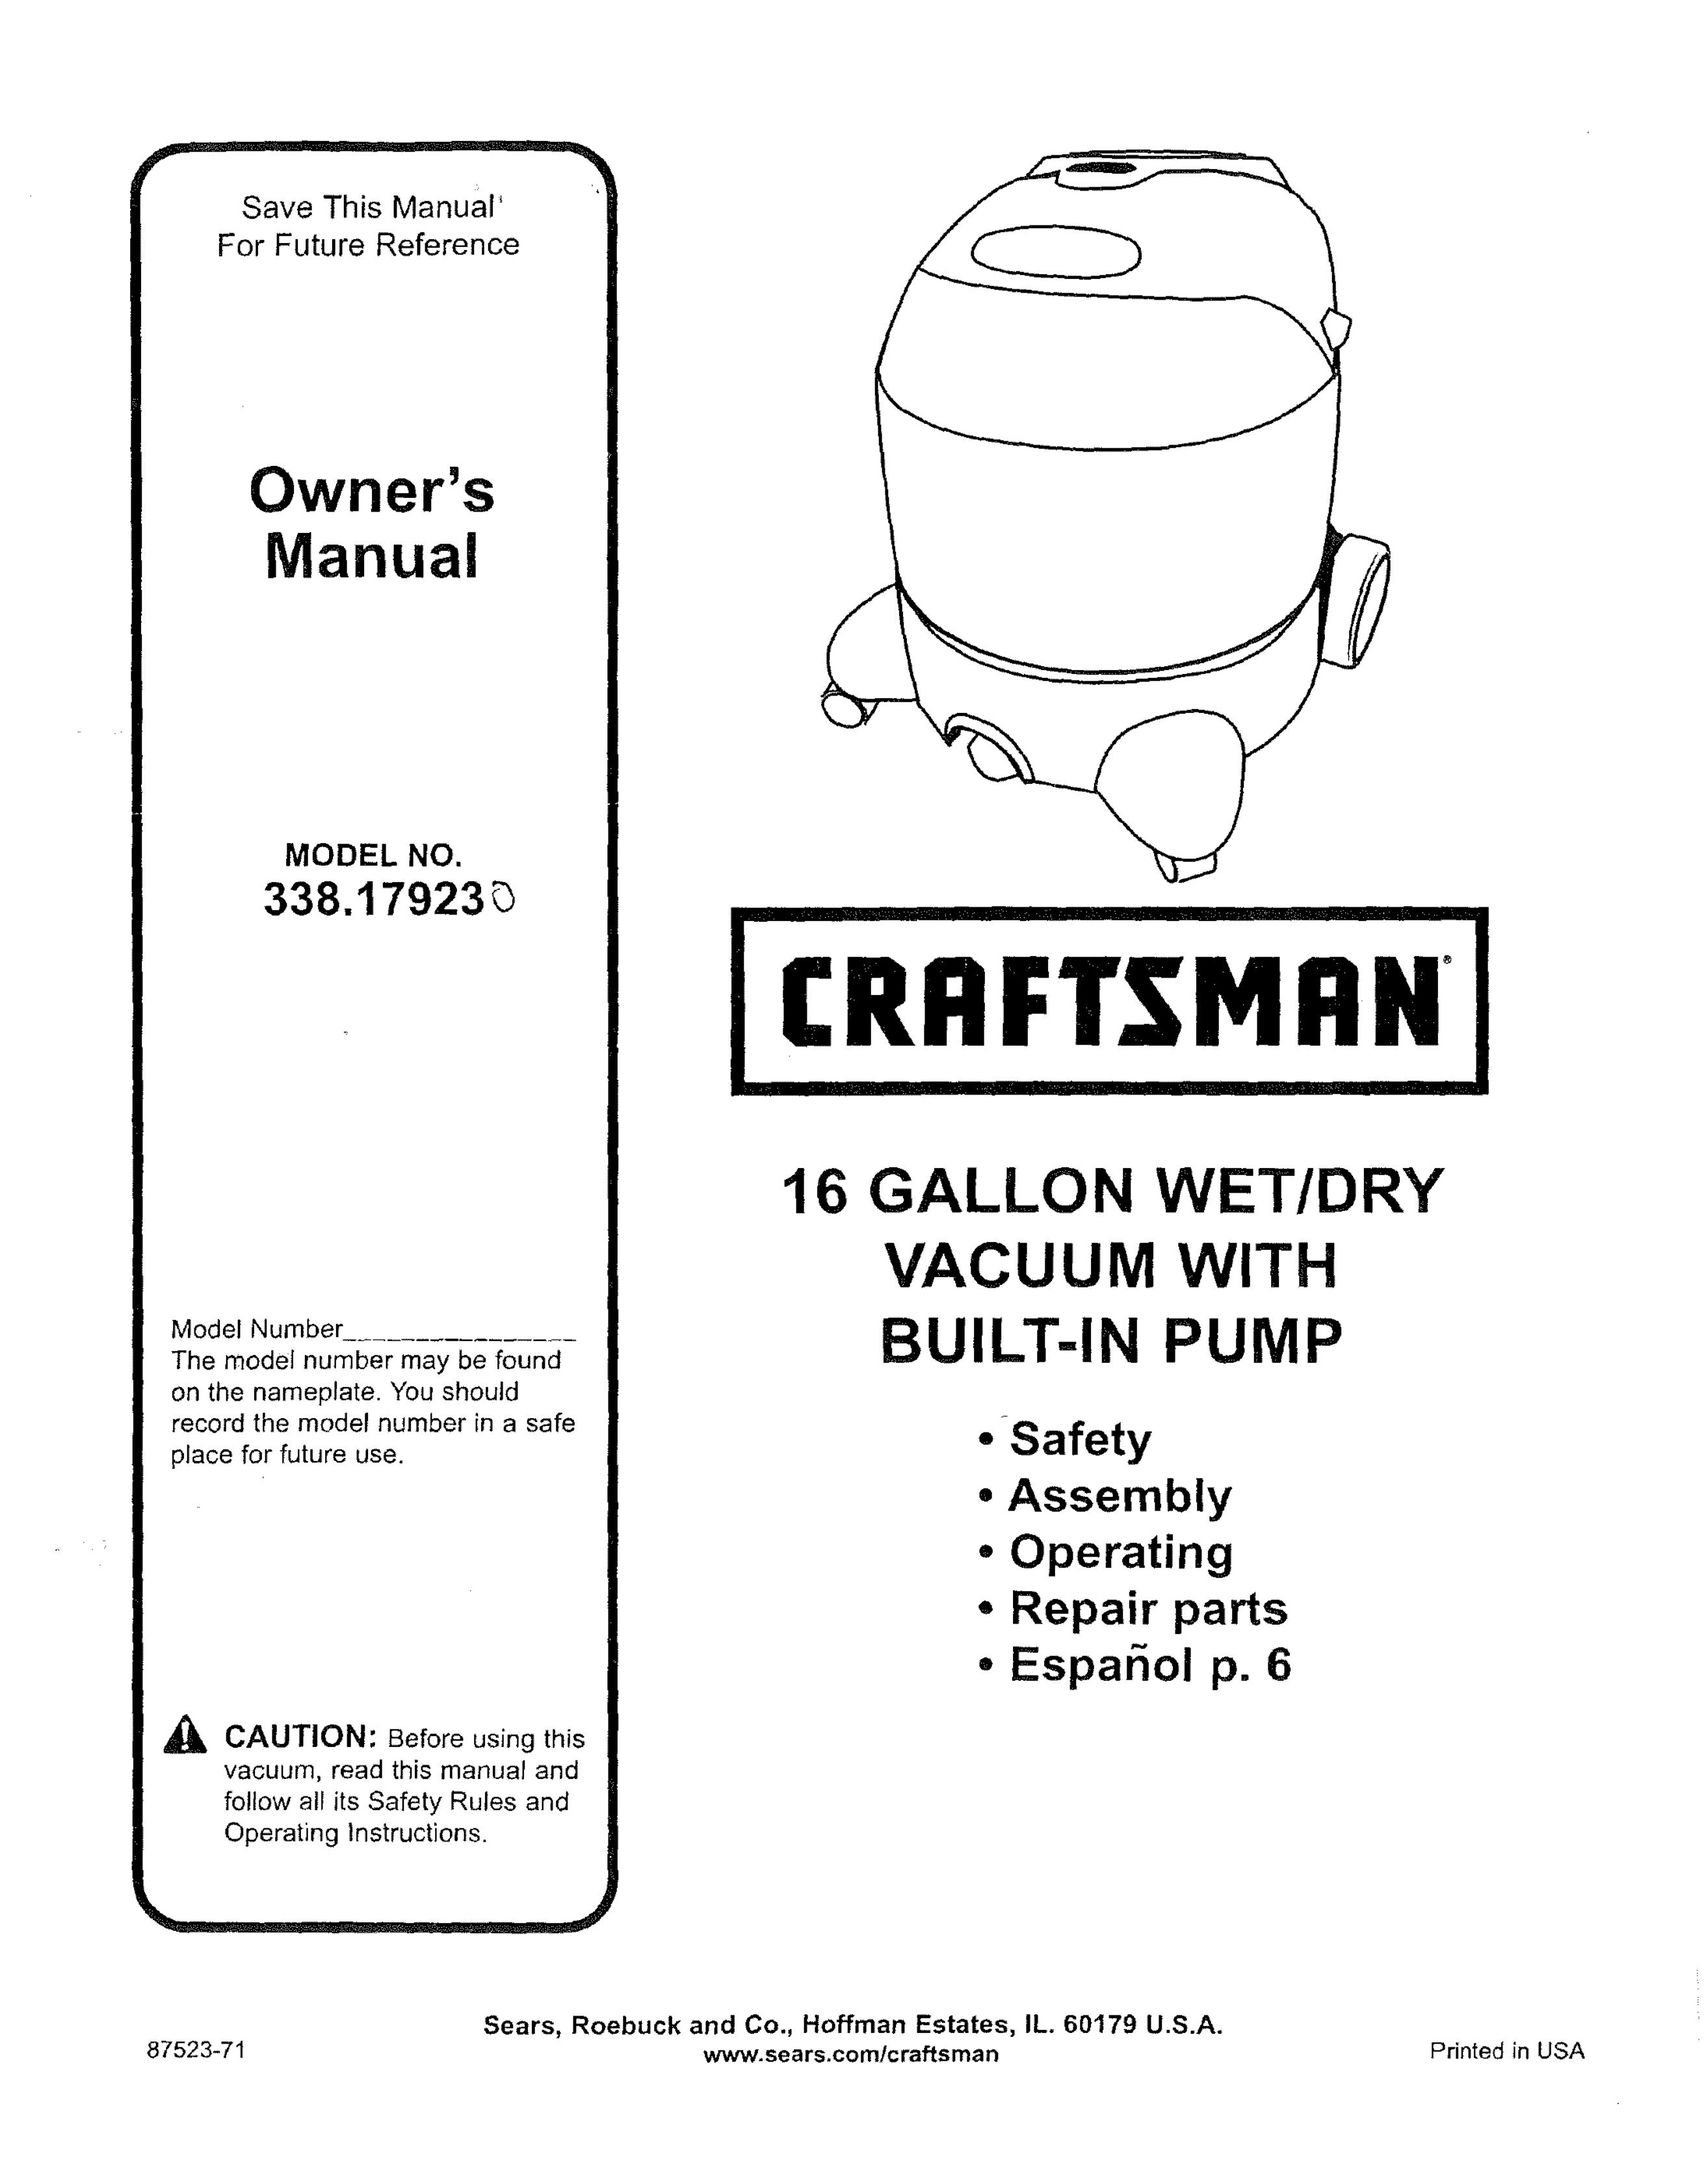 Craftsman 338.17923 Vacuum Cleaner User Manual